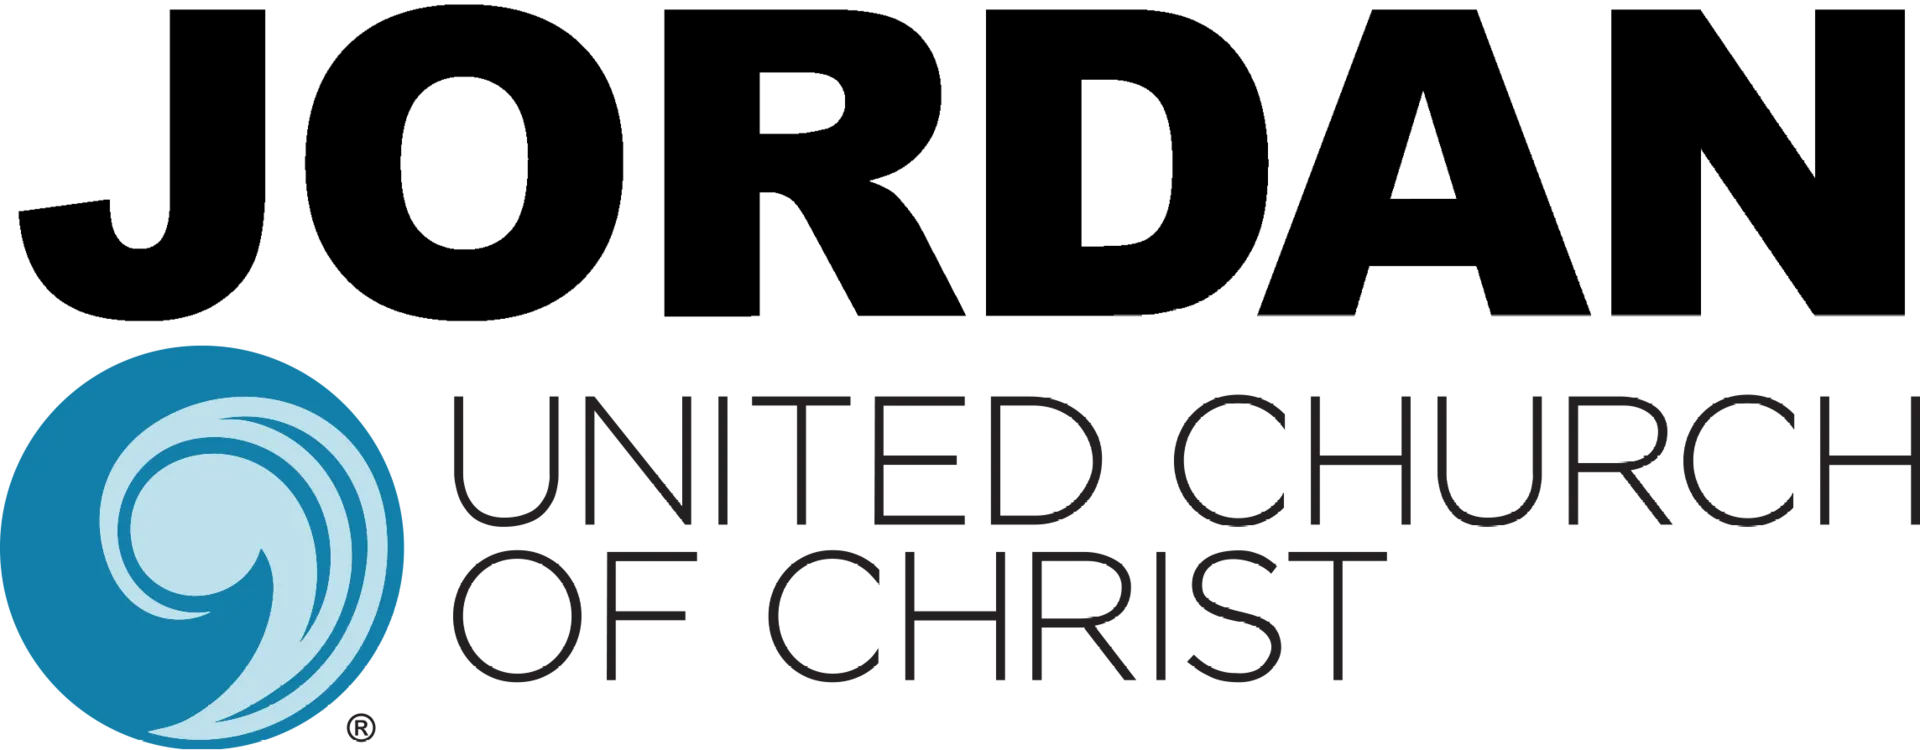 Jordan United Church of Christ